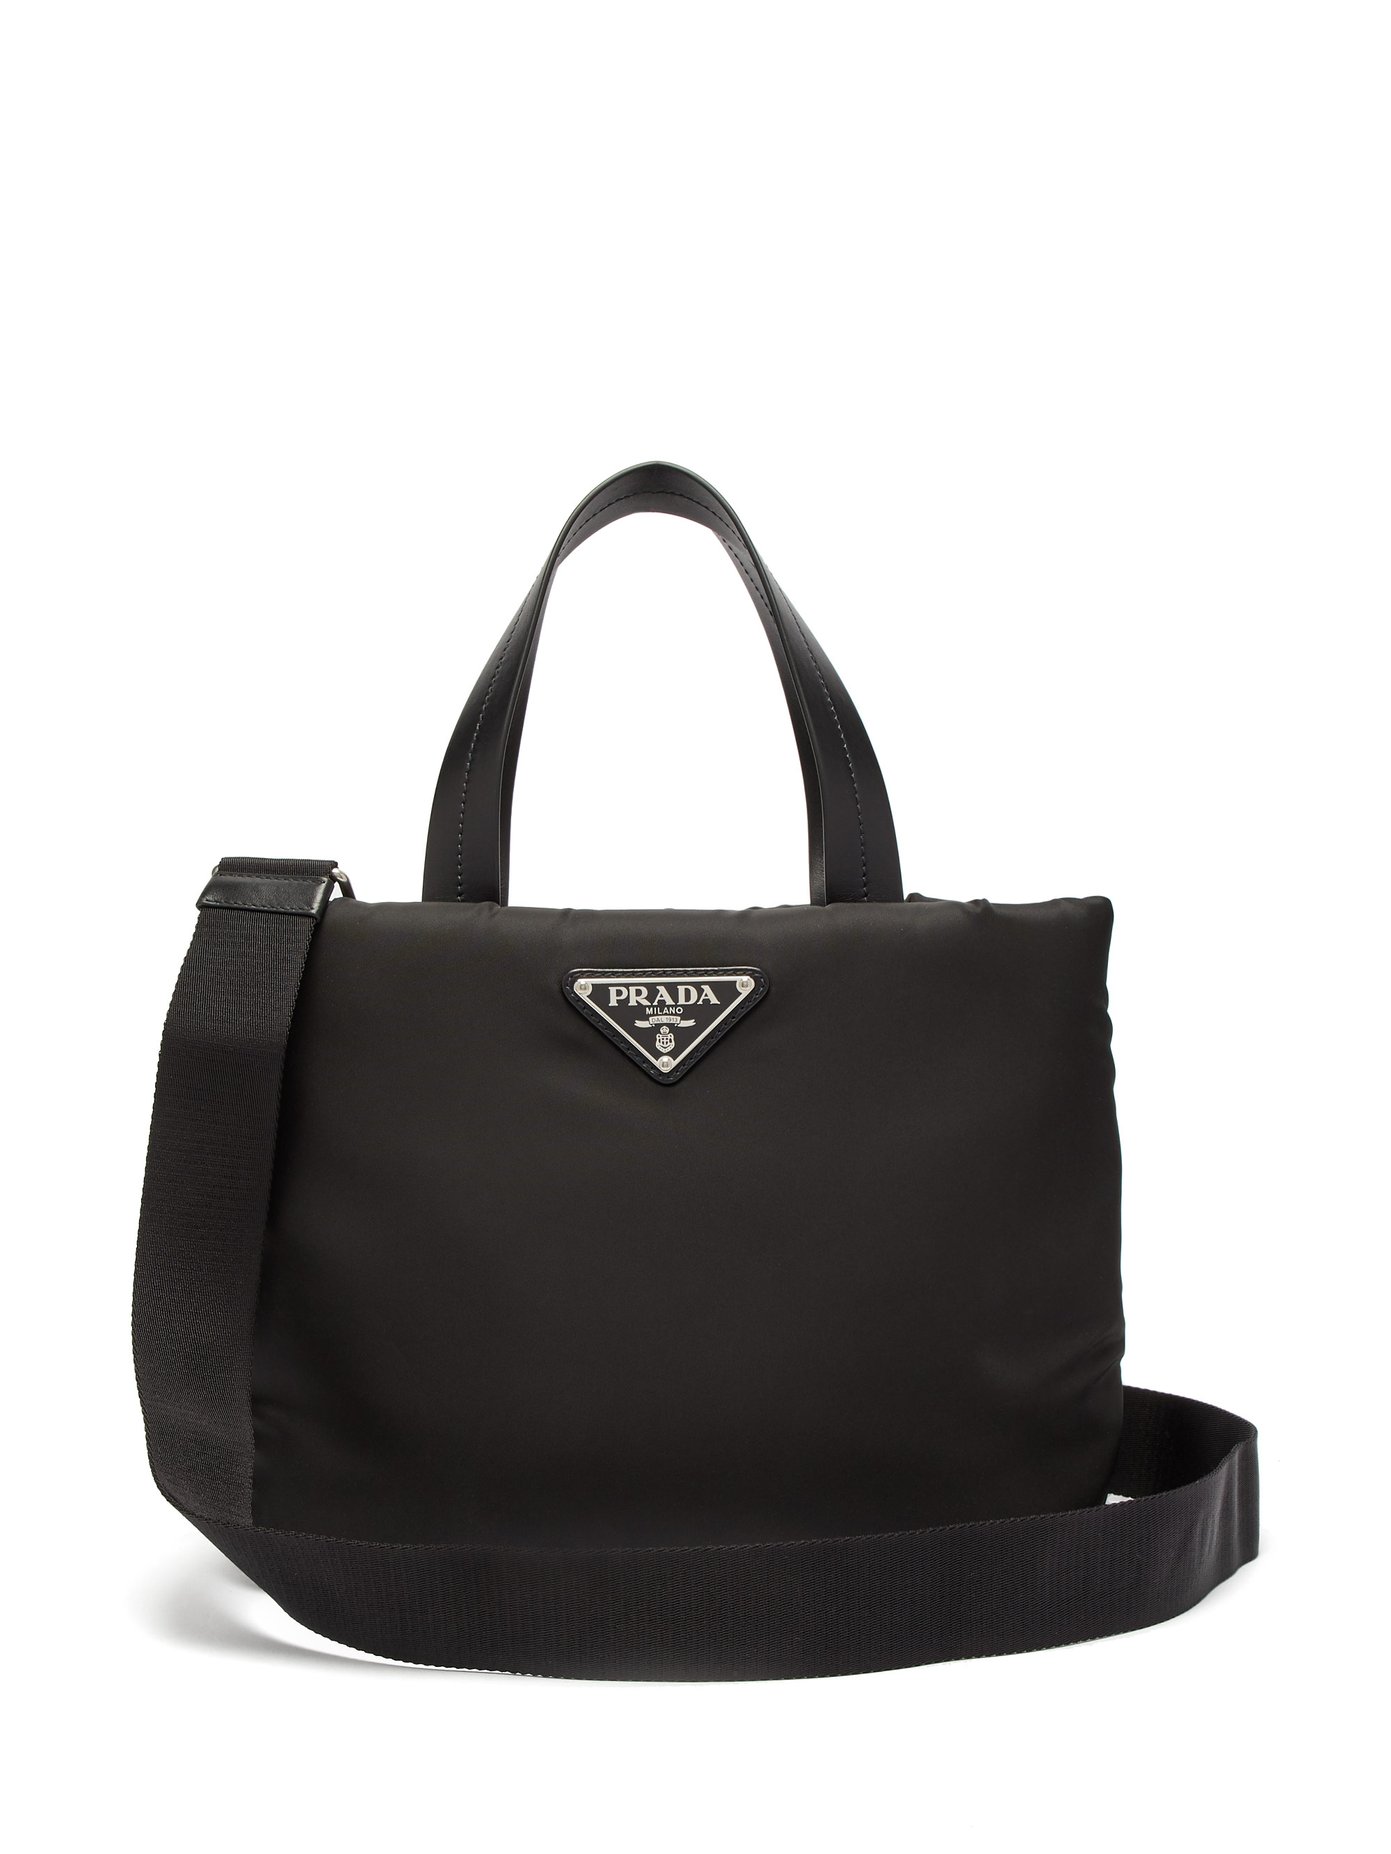 Prada Small Tote Bag Flash Sales, 58% OFF | www.emanagreen.com